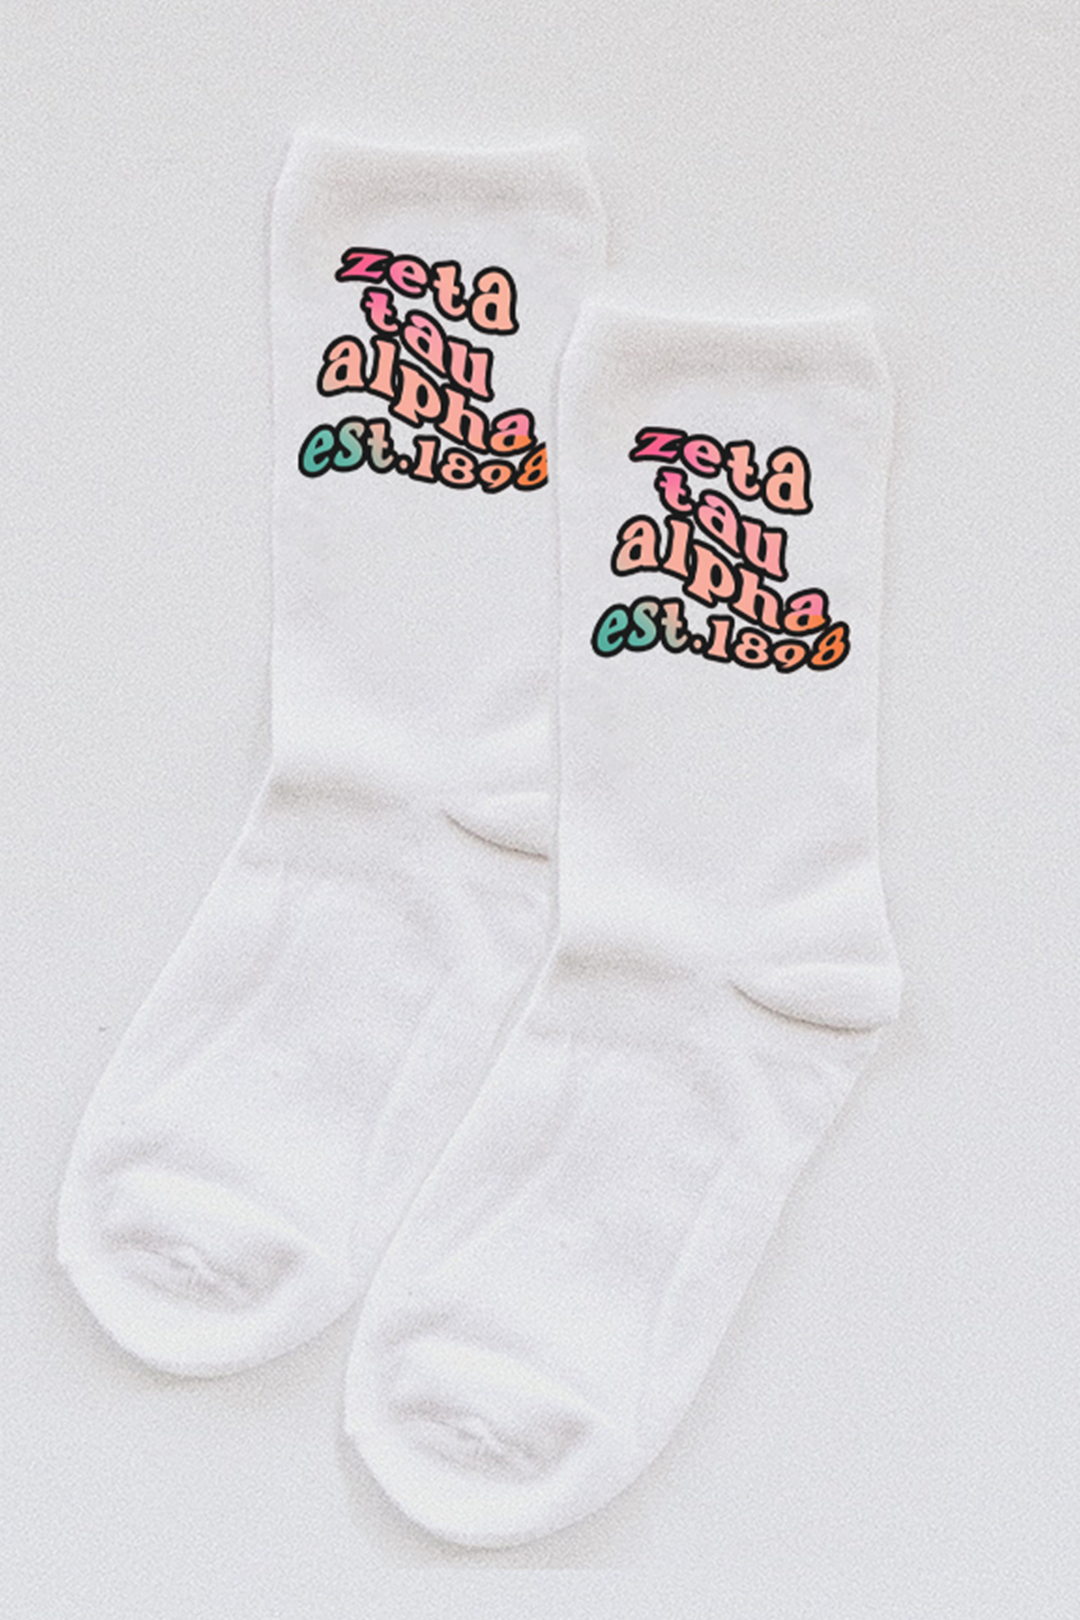 Gradient socks - Zeta Tau Alpha